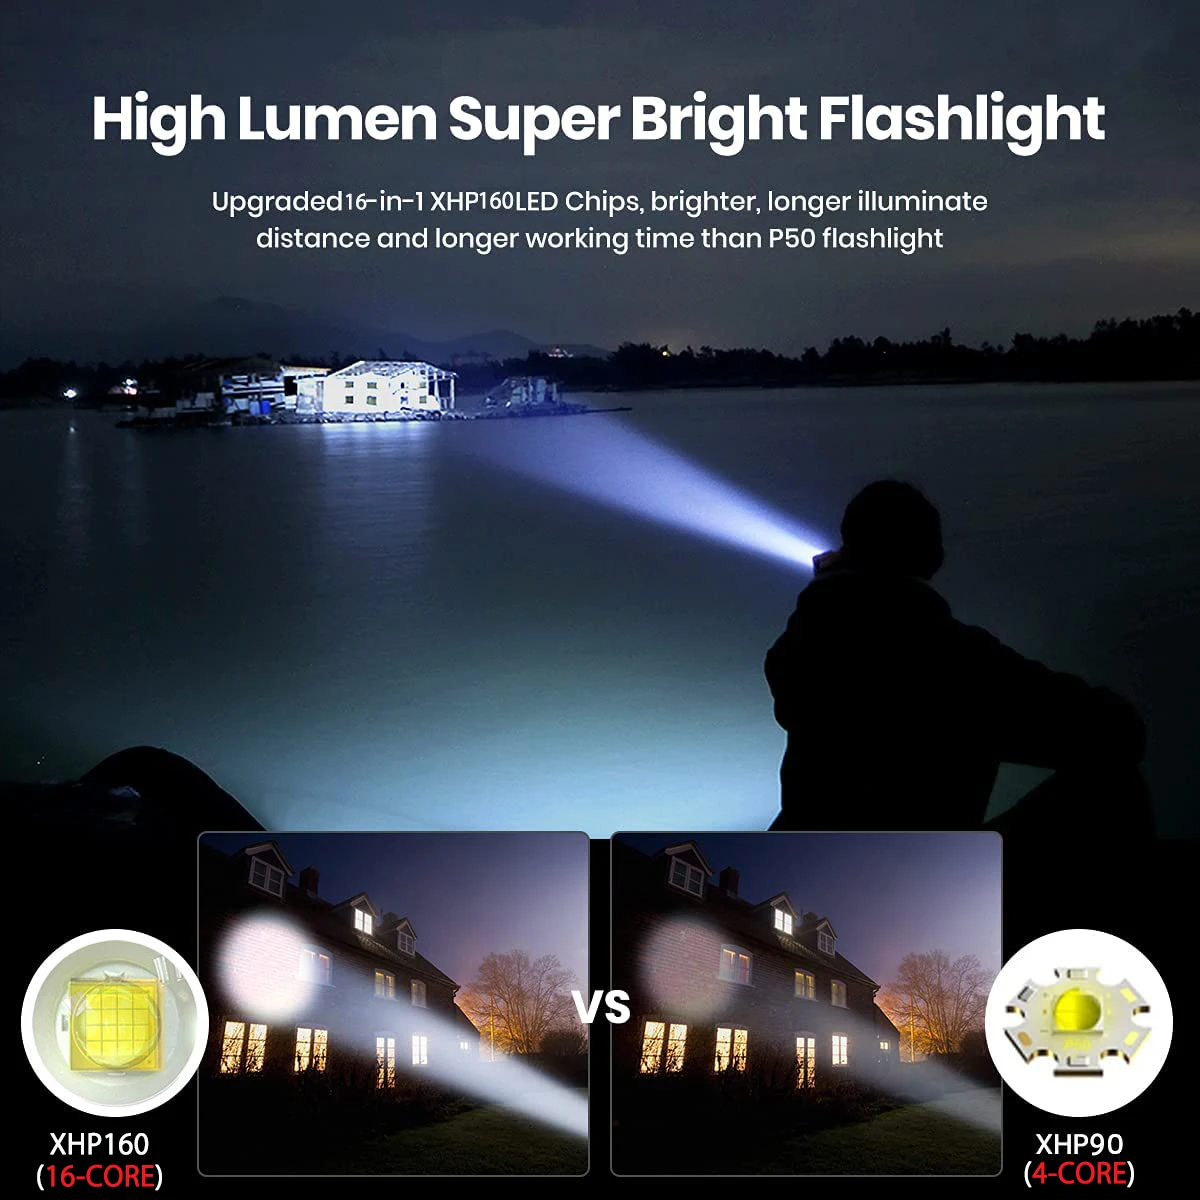 xhp160 powerful flashlight 16 core led hand lantern cob side light torch 7 lighting modes torchlight waterproof usb rechargeable free global shipping